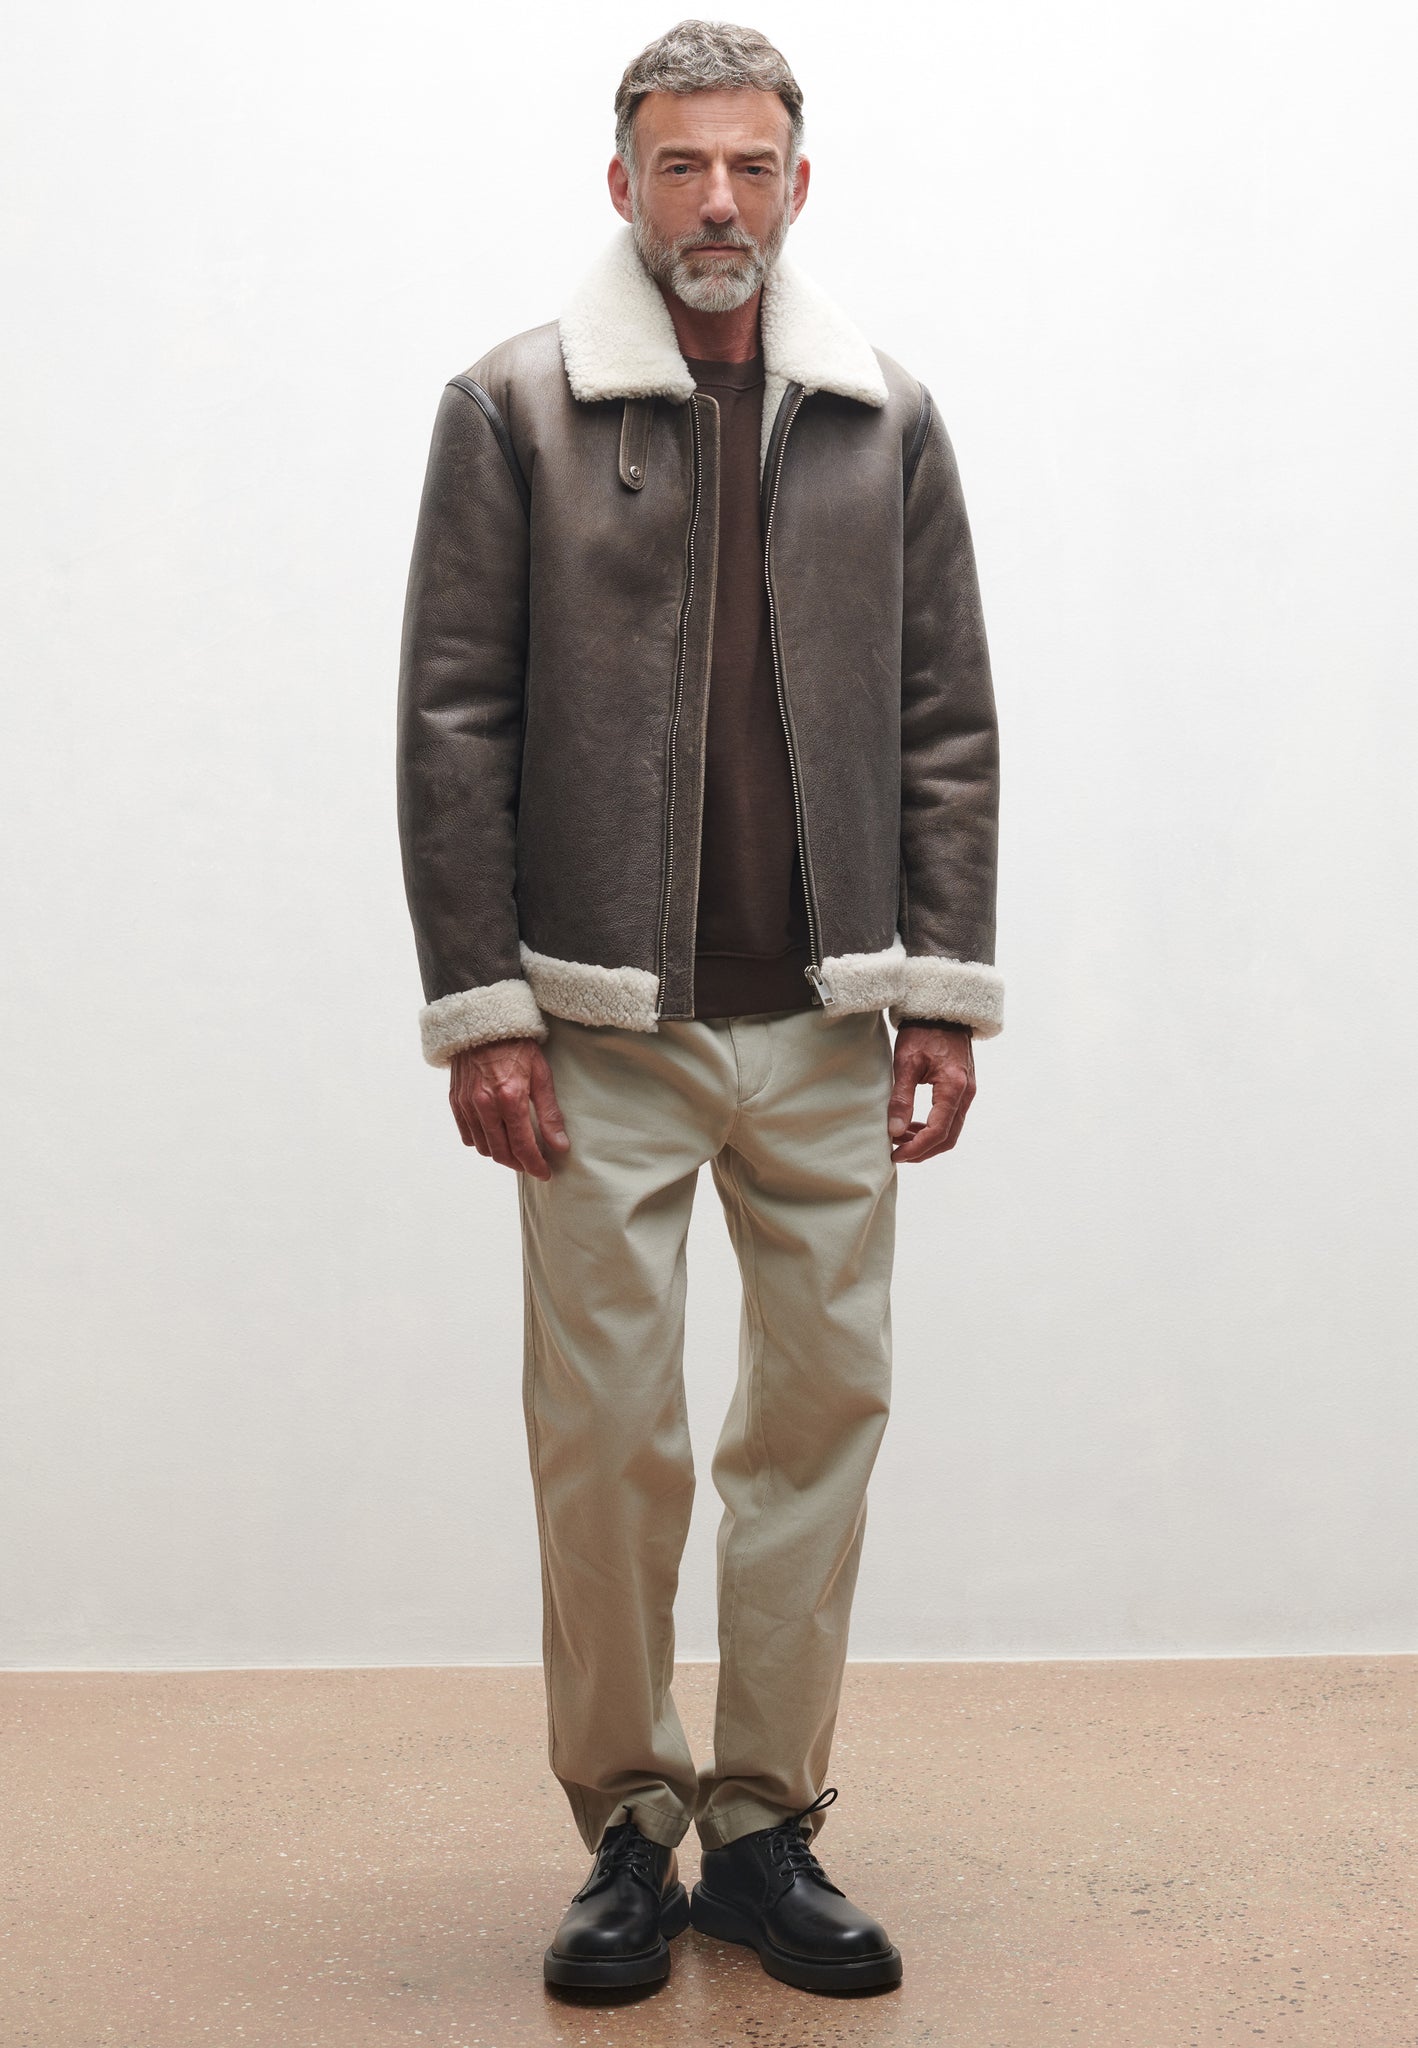 LAKE | Aviator inspired shearling jacket